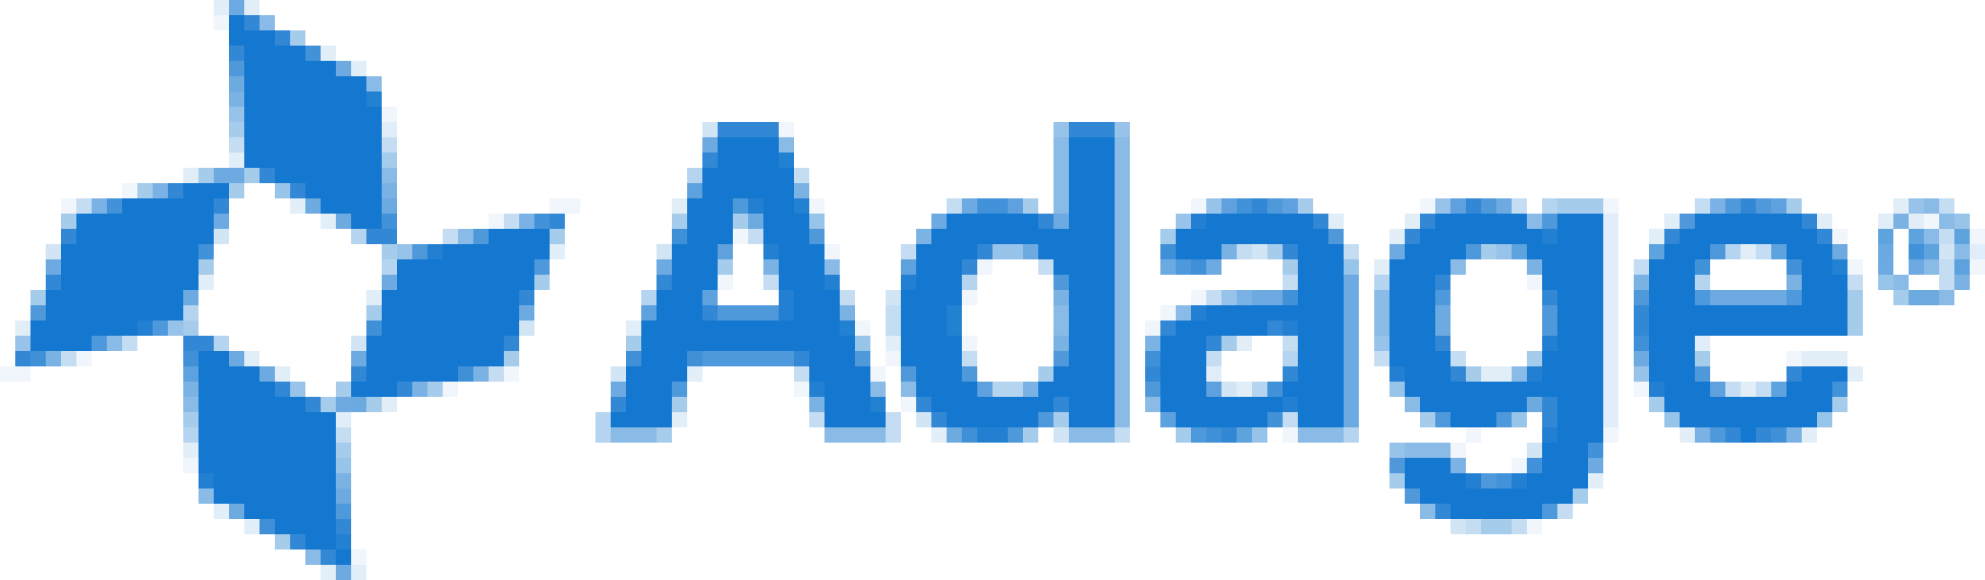 Adage Technologies logo